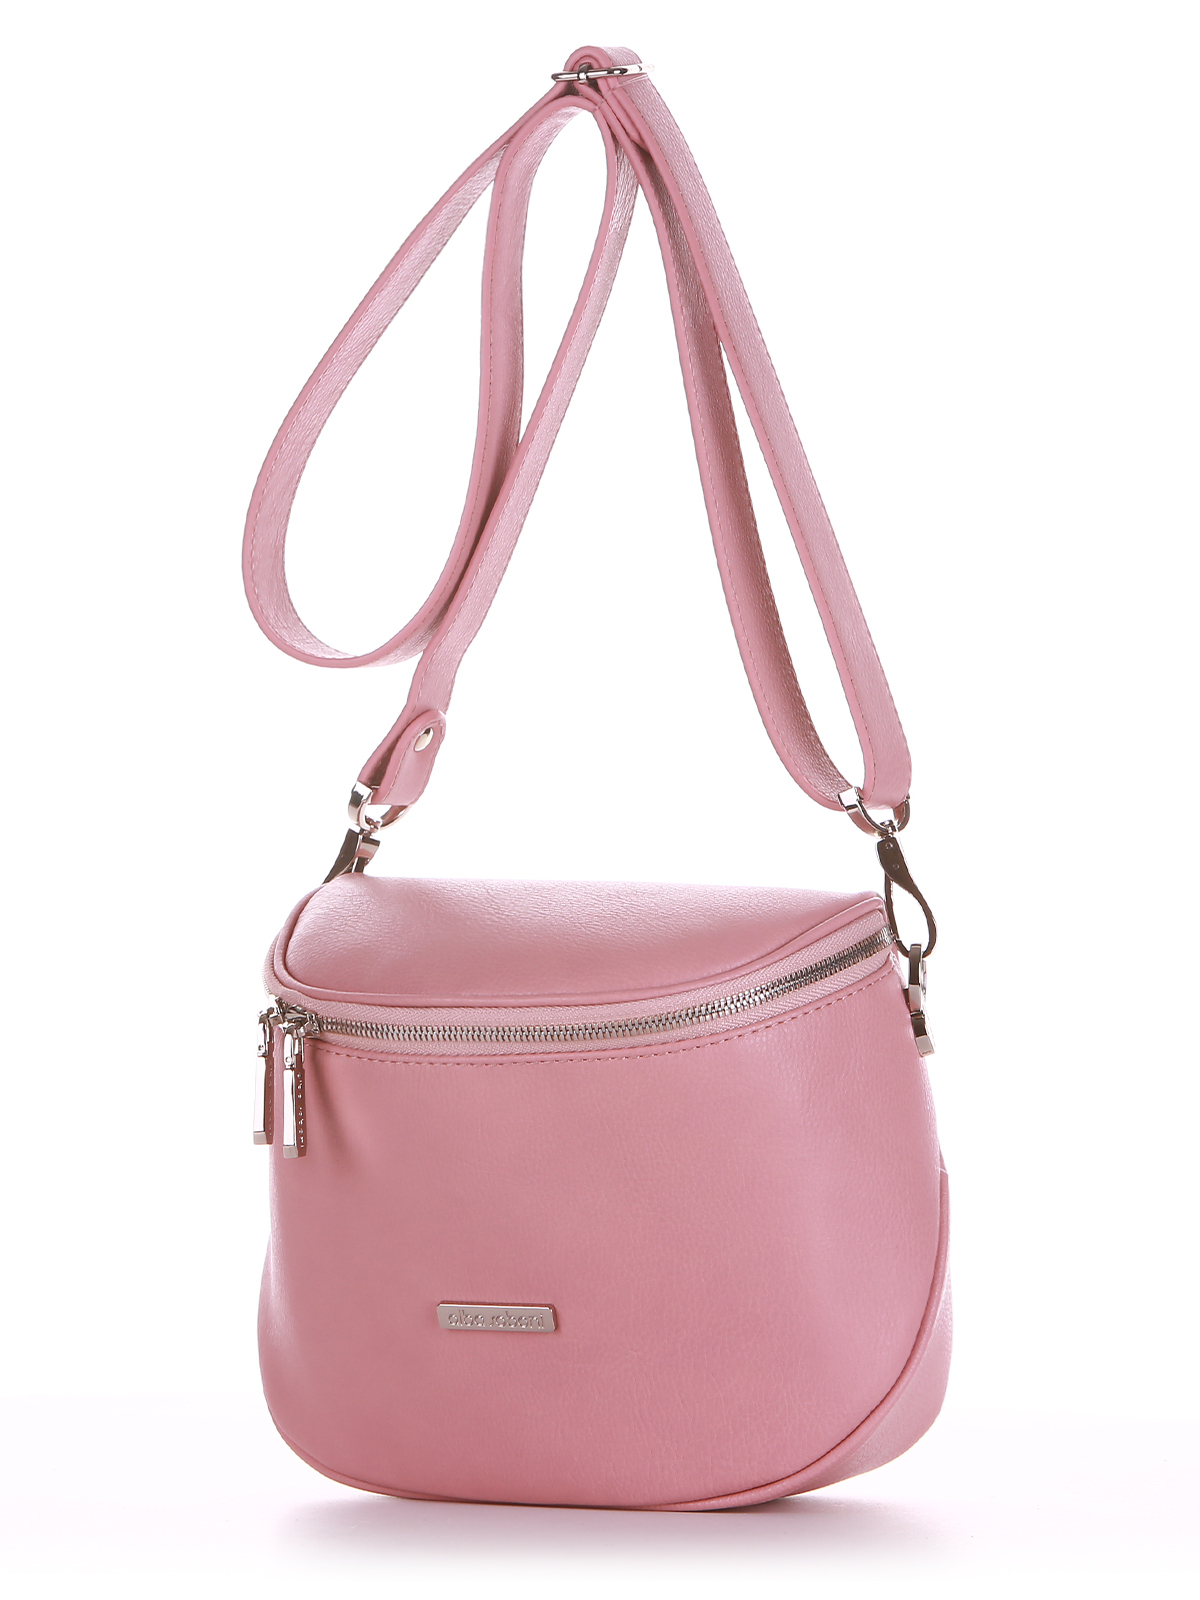 Розовая сумка через плечо. Лэтуаль сумка розовая через плечо. Сумка розовая маленькая. Розовая сумка через плечо женская. Сумка розовая сумка через плечо.